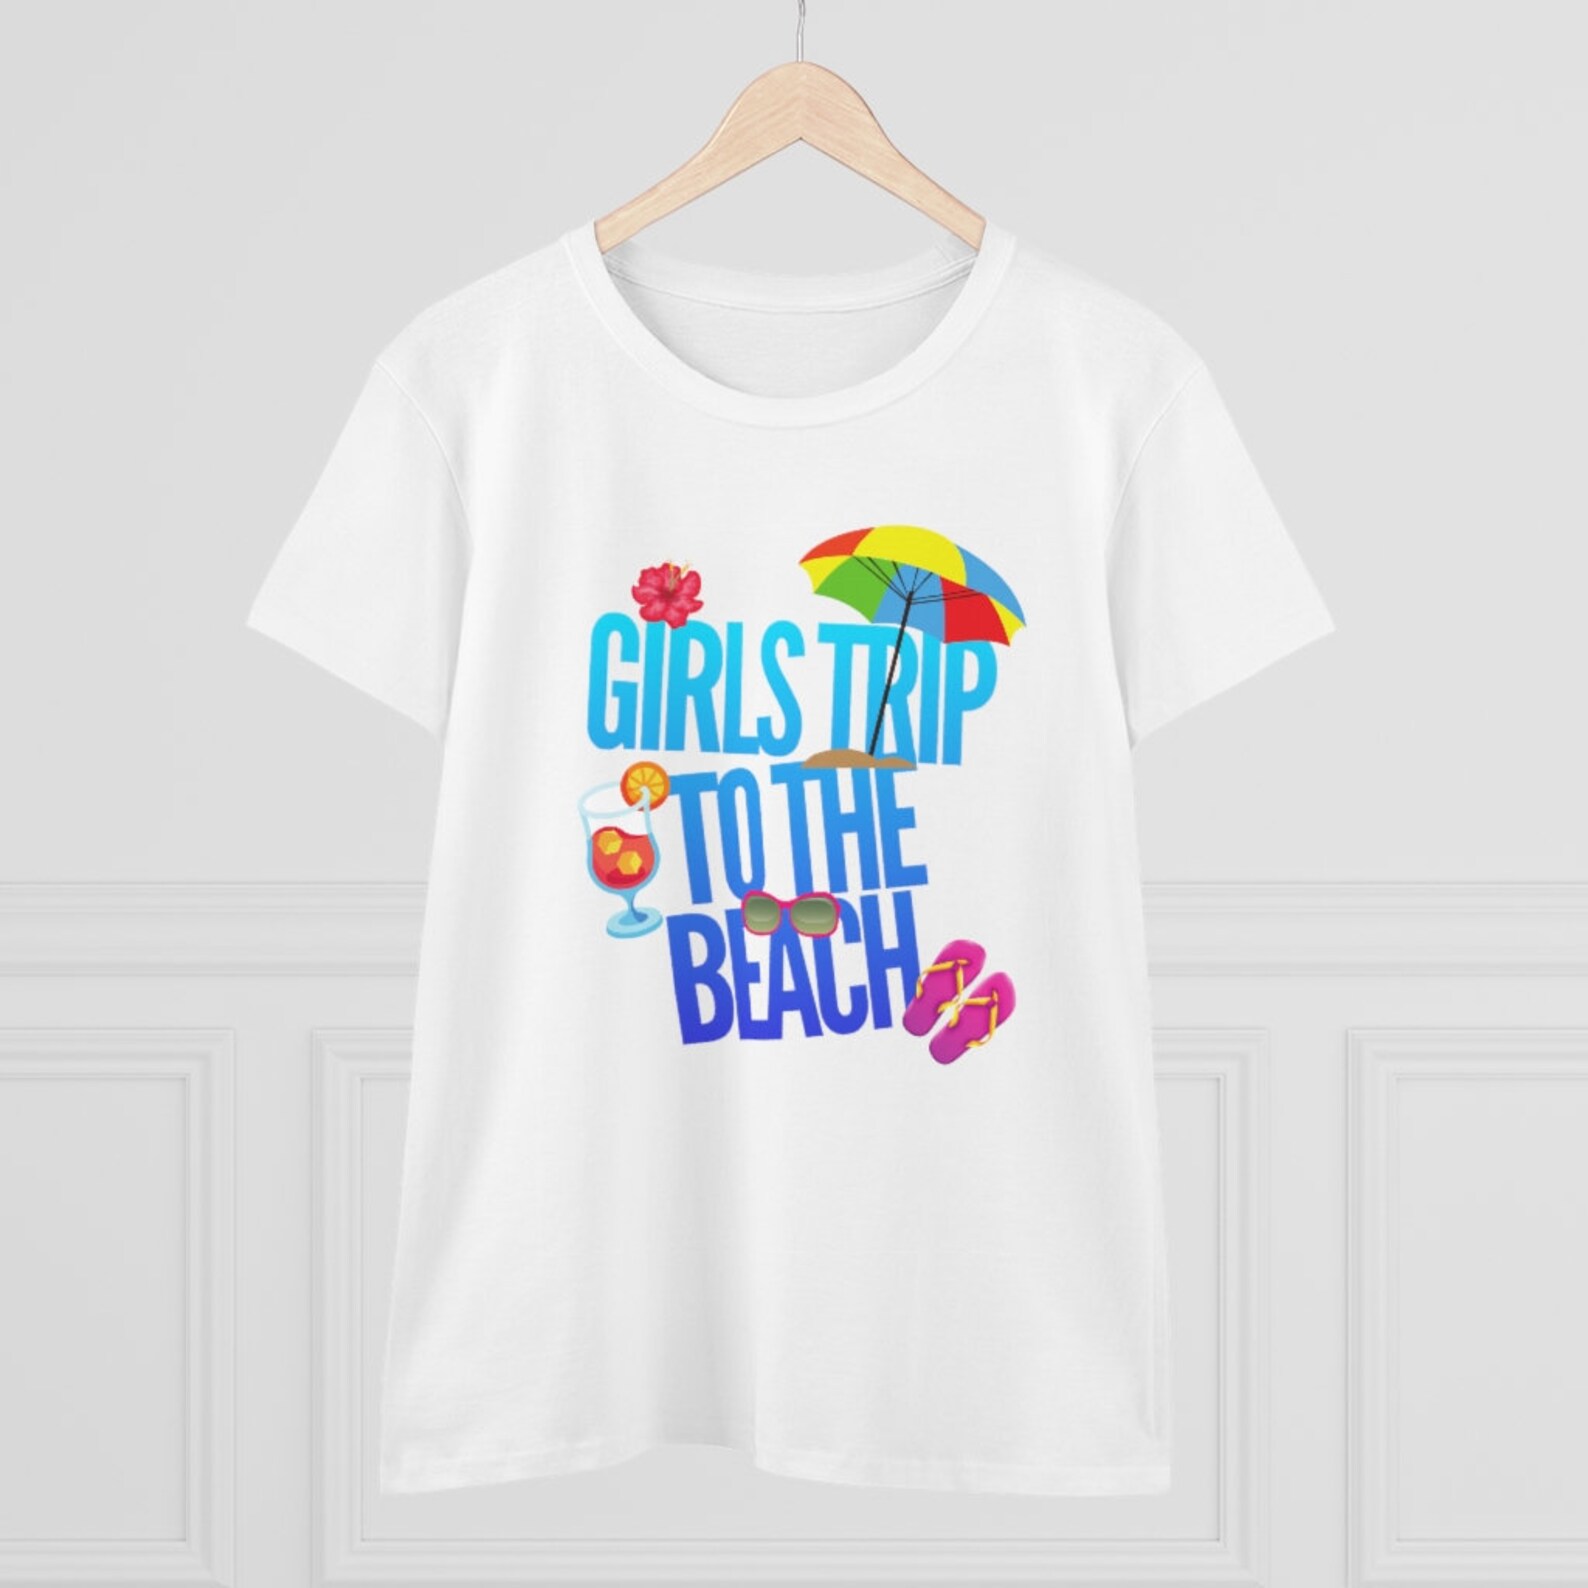 Girls trip to the beach shirts Girls Trip Shirts Best | Etsy